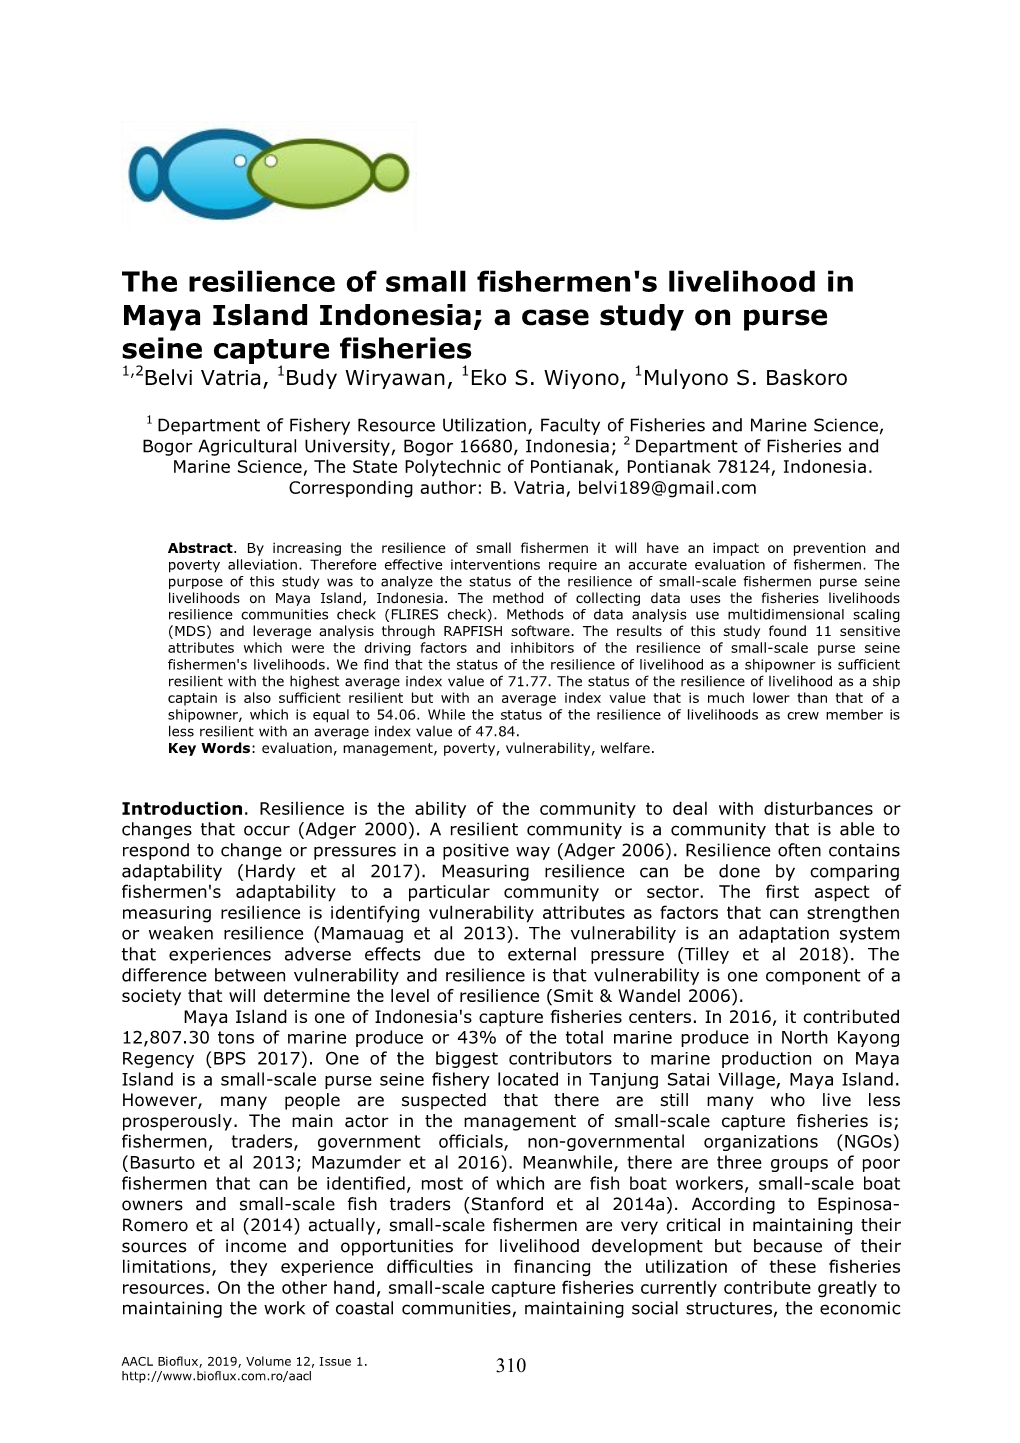 The Resilience of Small Fishermen's Livelihood in Maya Island Indonesia; a Case Study on Purse Seine Capture Fisheries 1,2Belvi Vatria, 1Budy Wiryawan, 1Eko S